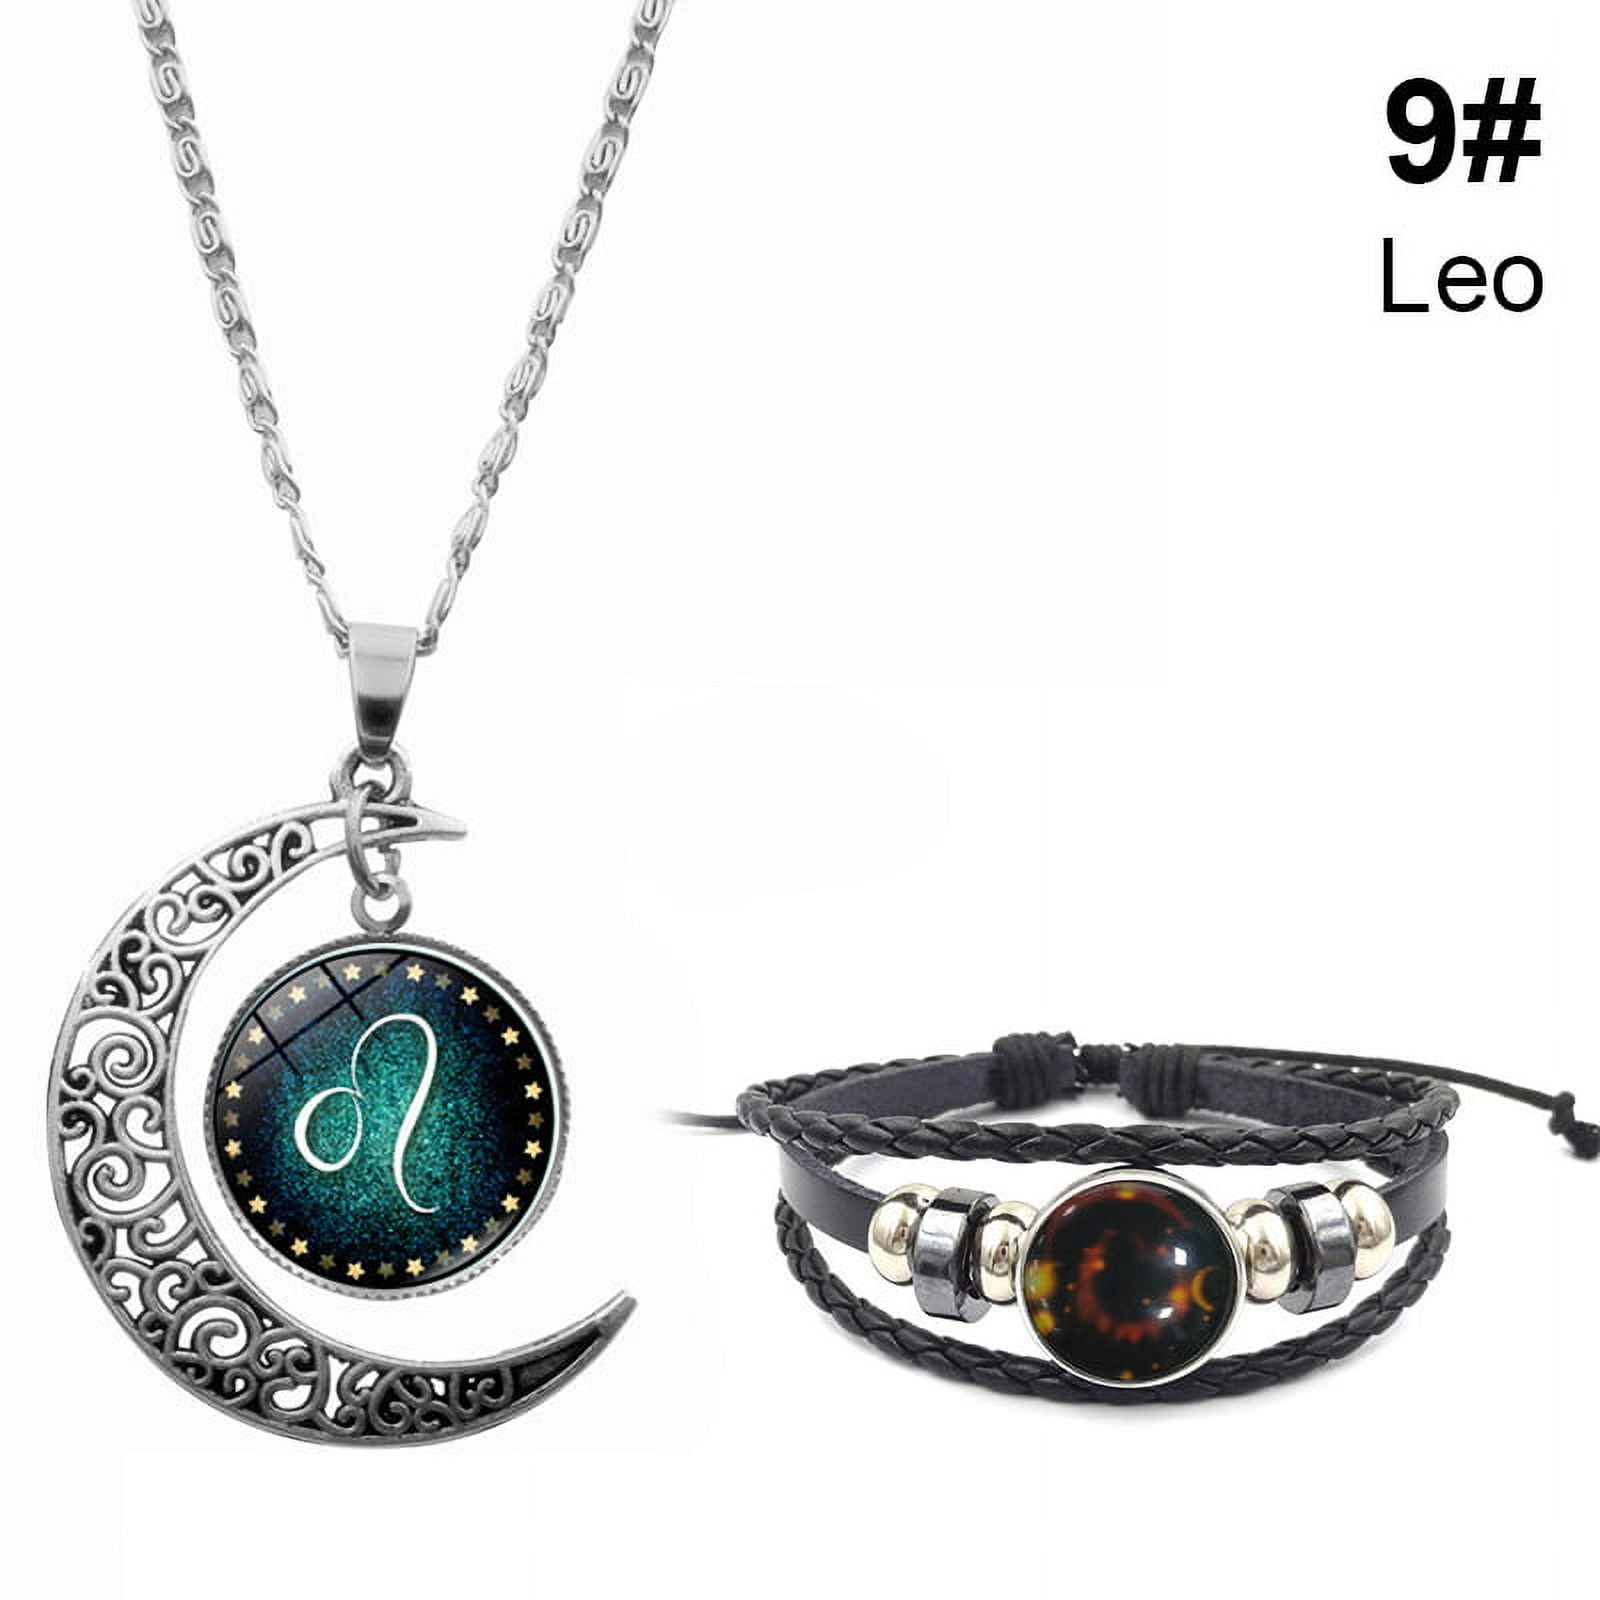 Adjustable leather necklace with Gemini zodiac charm